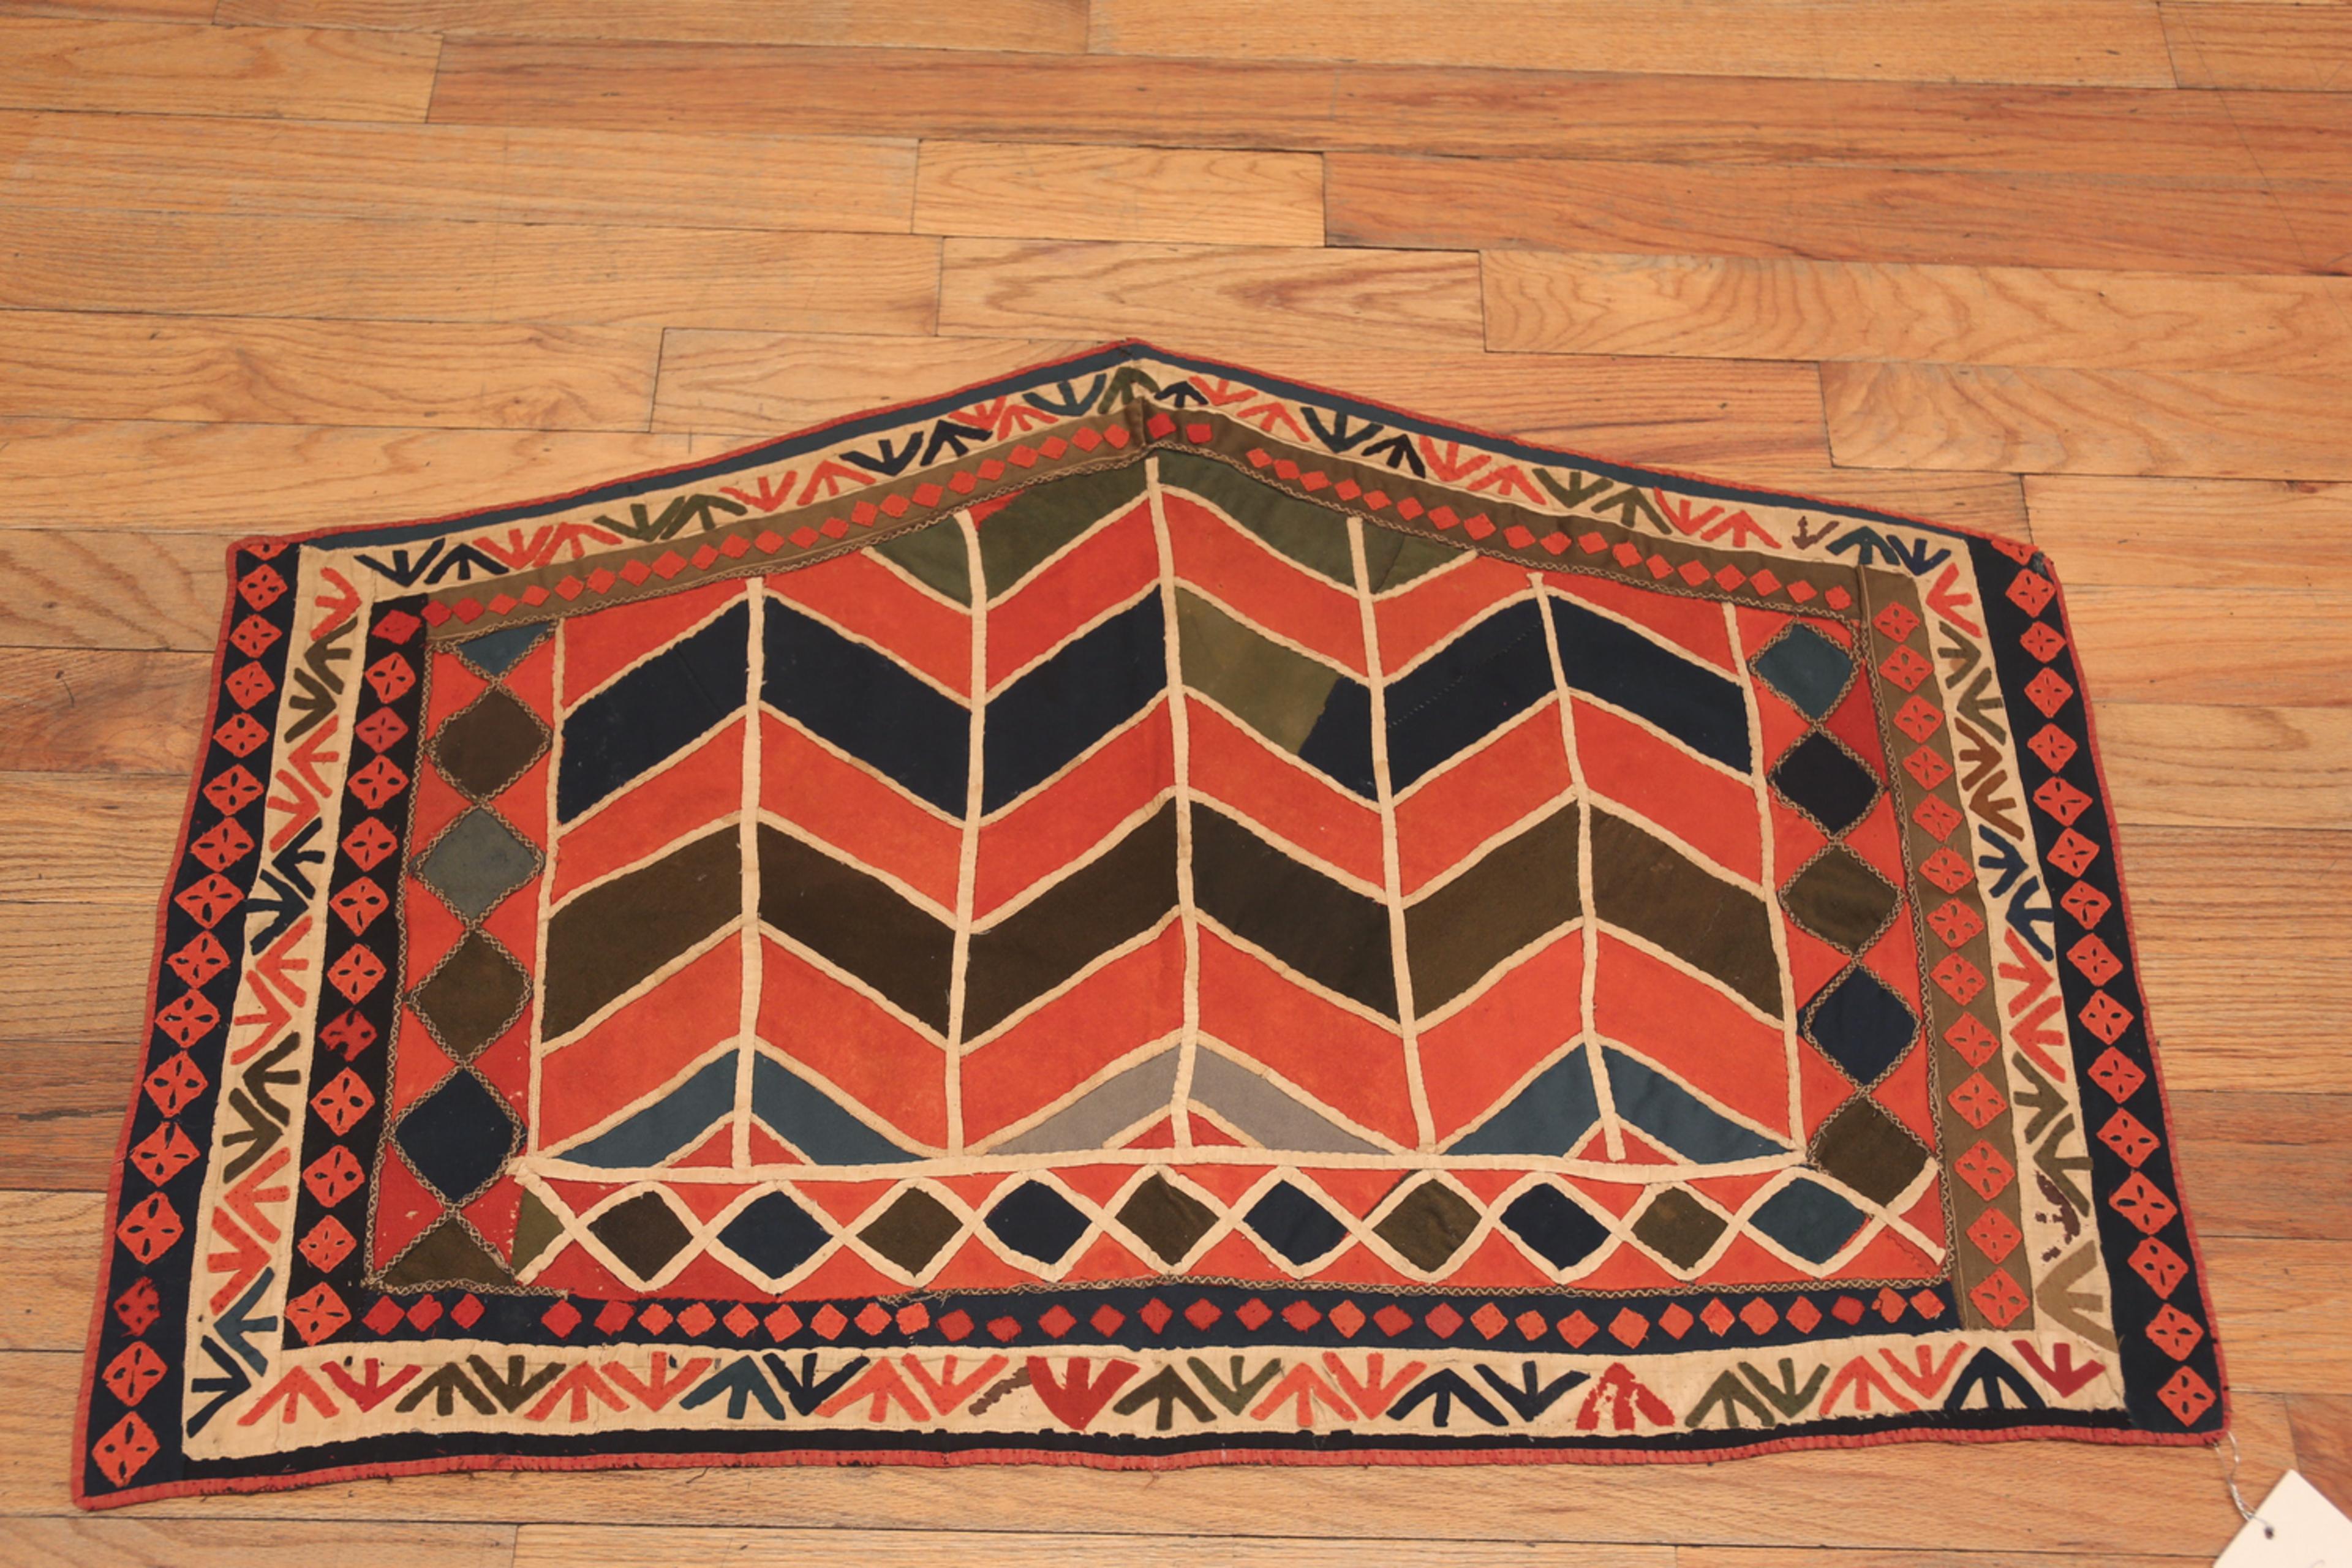 Pair Of Antique Uzbek Karakalpak Textiles, Country of Origin: Uzbekistan, Circa Date: 1900. Size: 3 ft 7 in x 2 ft 4 in (1.09 m x 0.71 m)

